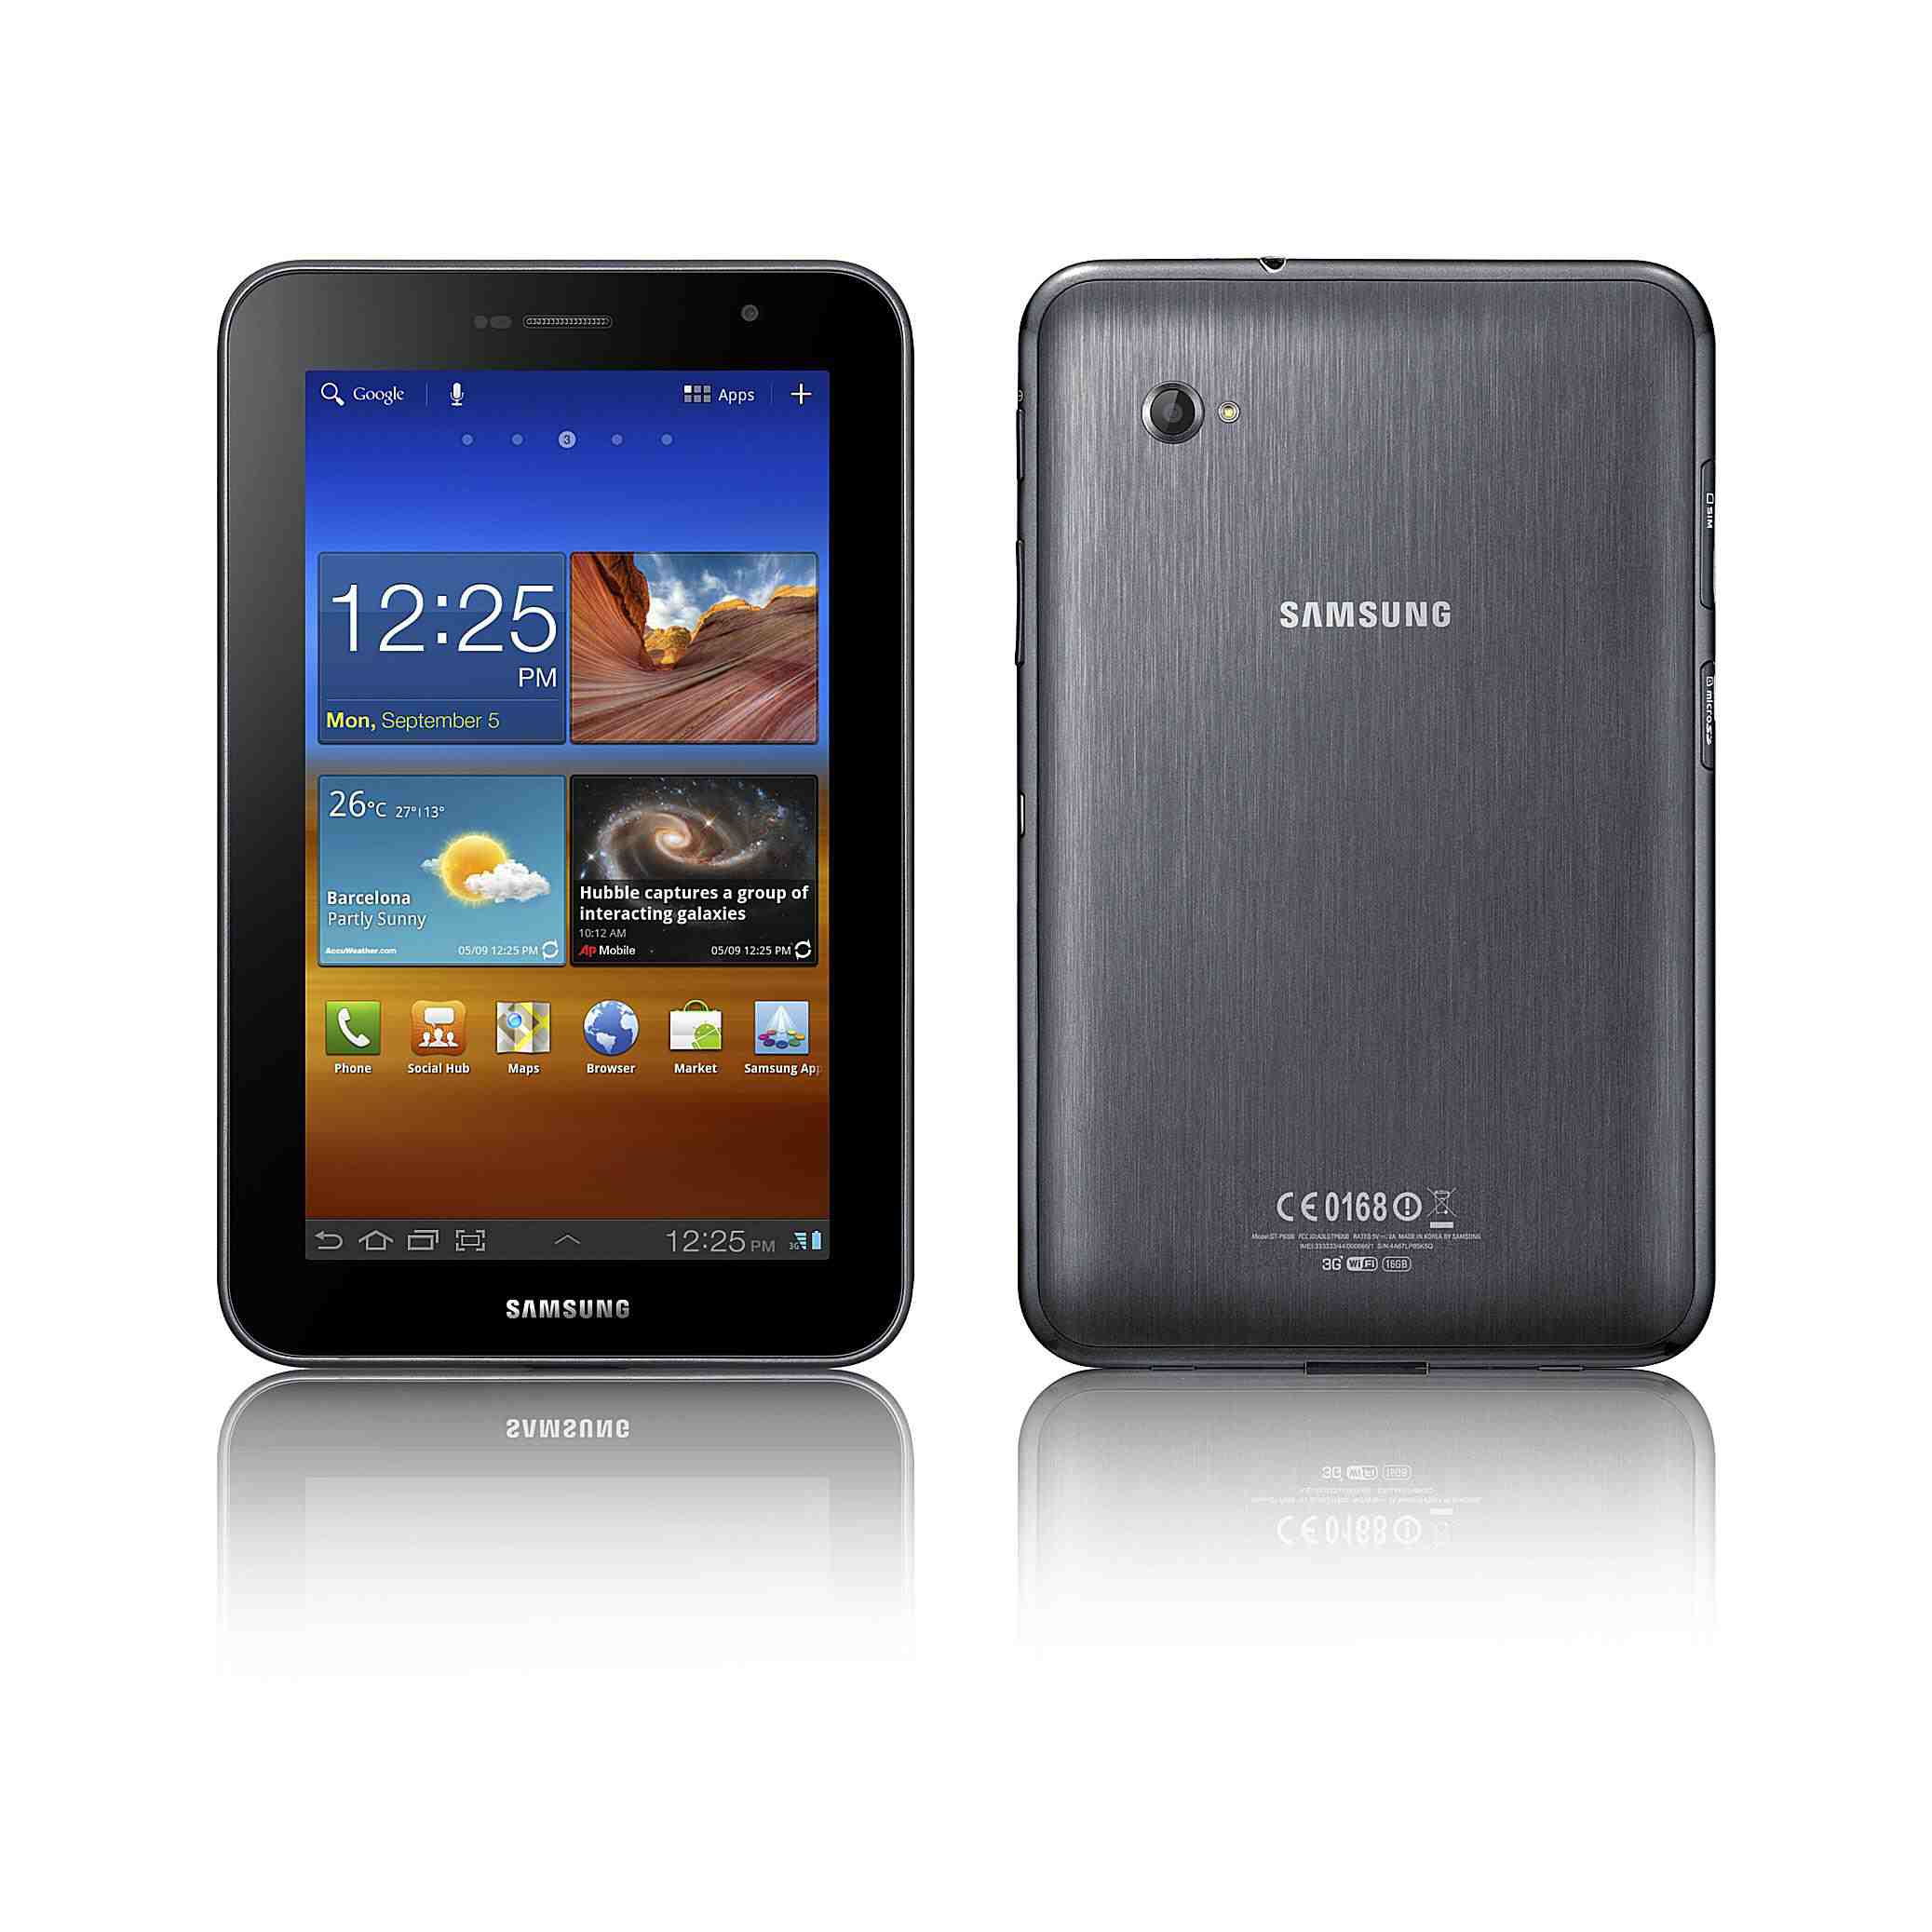 Galaxy Tab 7 Plus